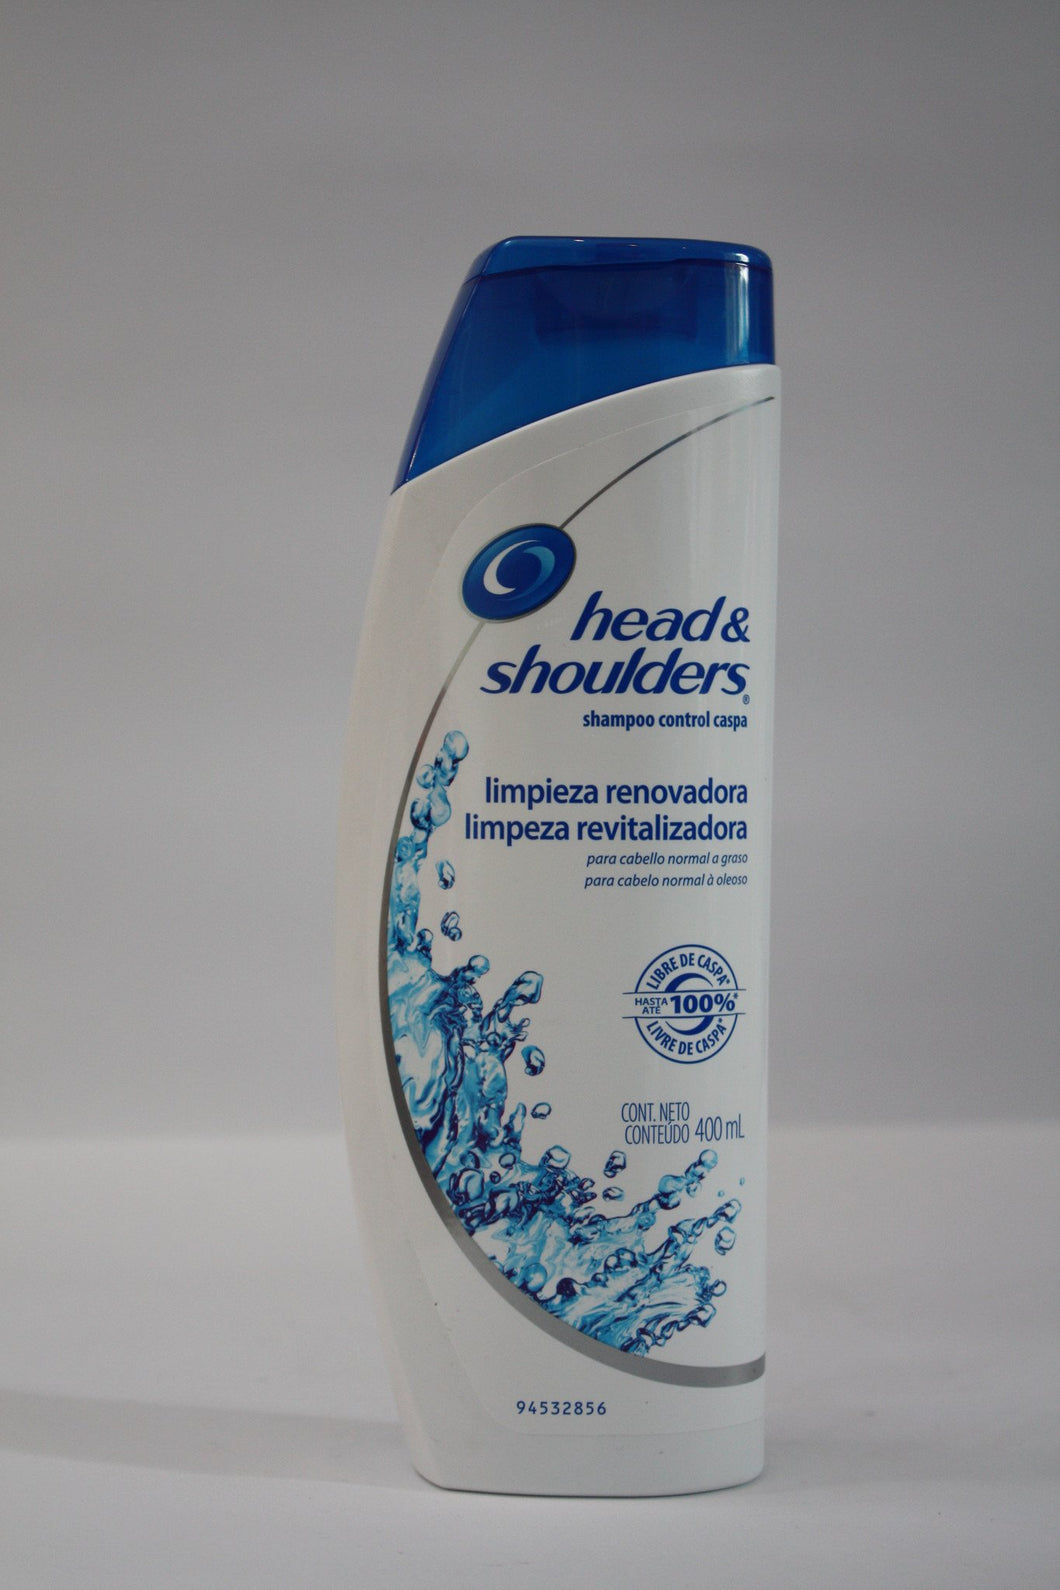 Media Caja Shampoo Head & Shoulders Limpieza Renovadora de 400 ml con 6 piezas - Procter & Gamble-Shampoo-Procter & Gamble-7501001133276-MayoreoTotal